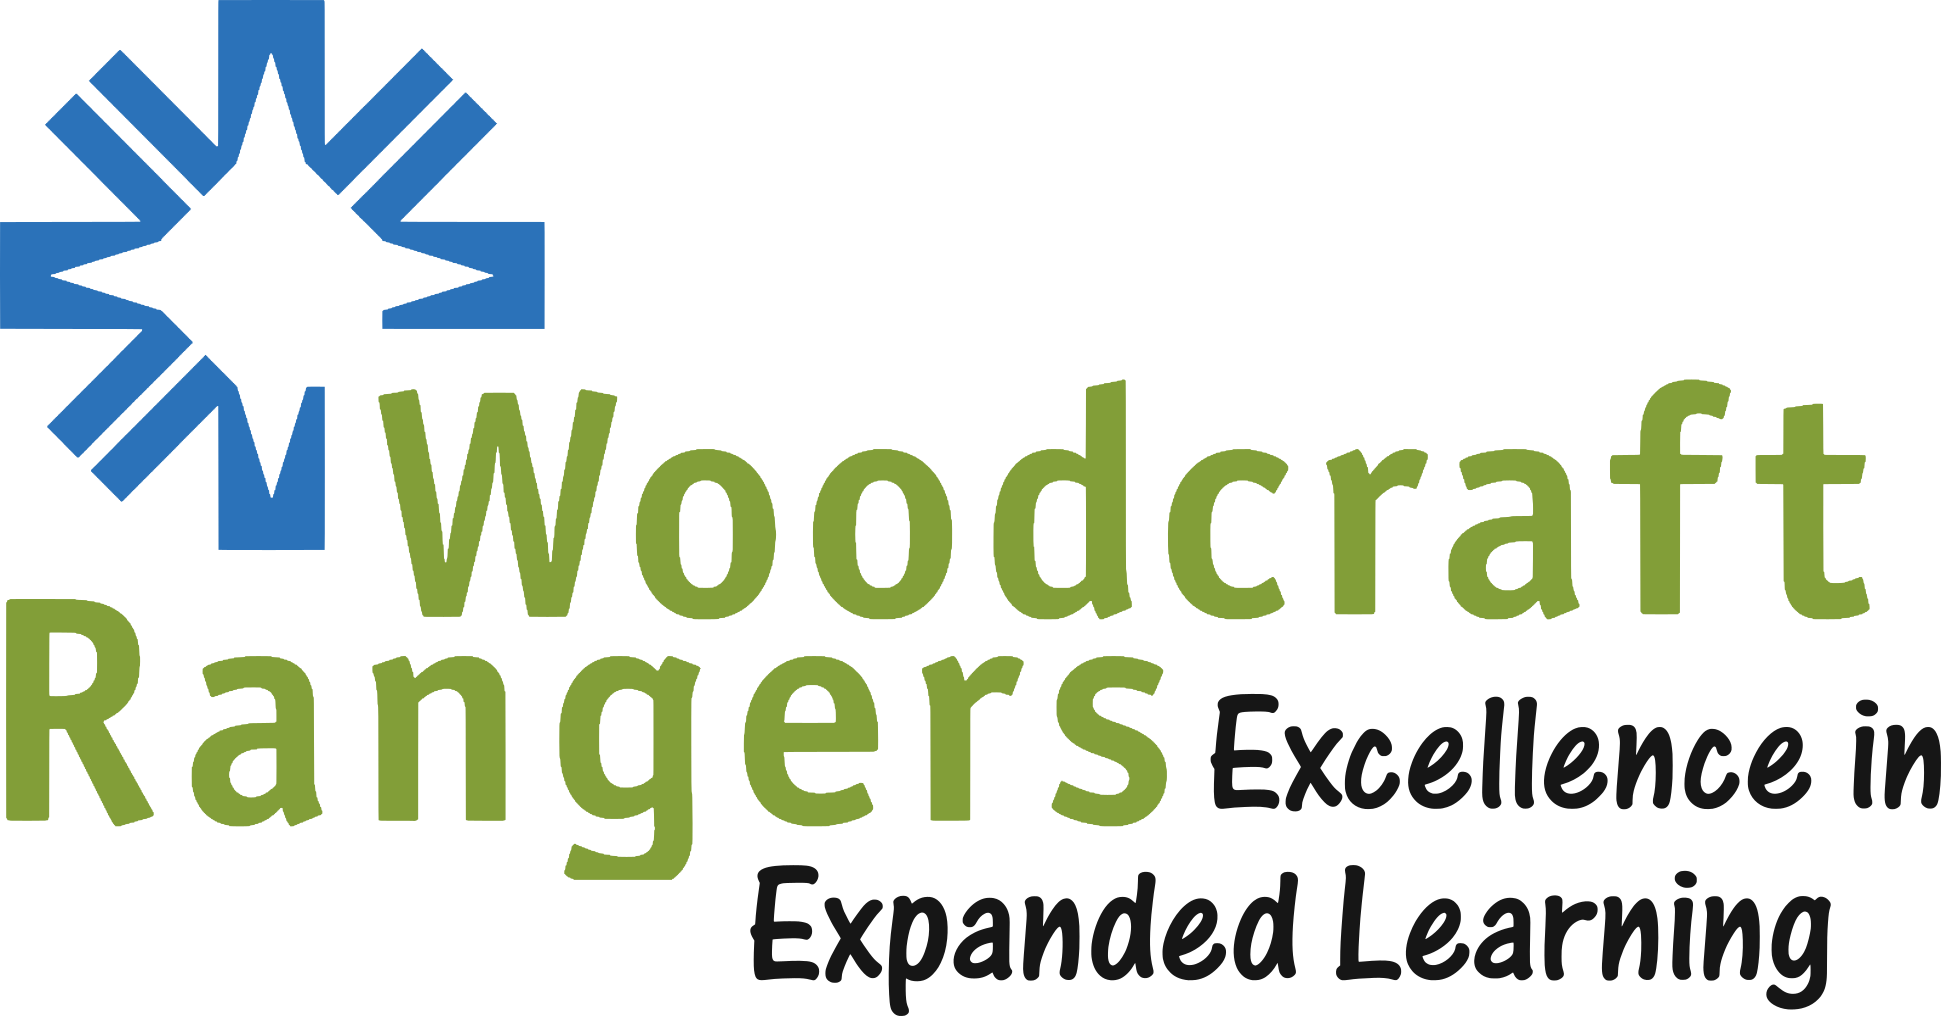 Woodcraft Rangers Logo 2018 Transparent.png